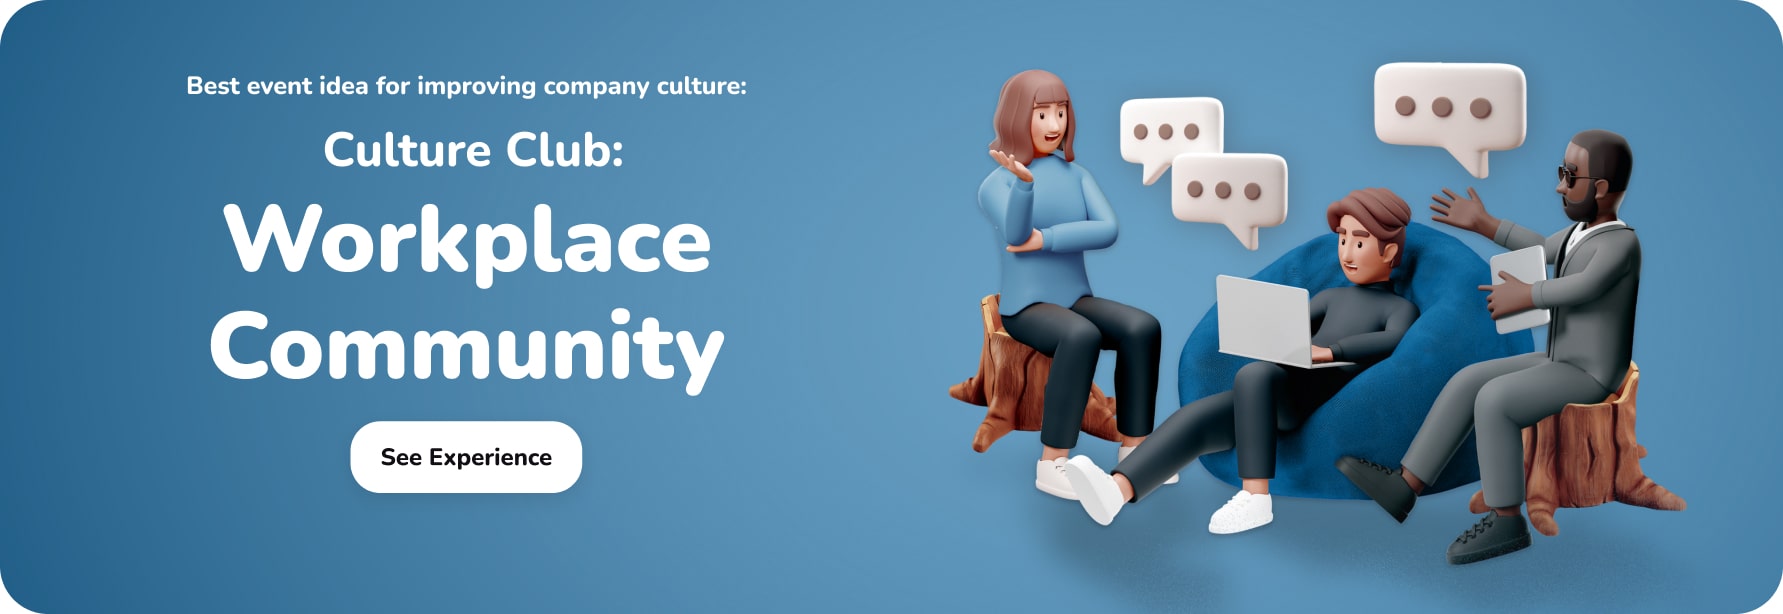 Culture Club: Workplace Community